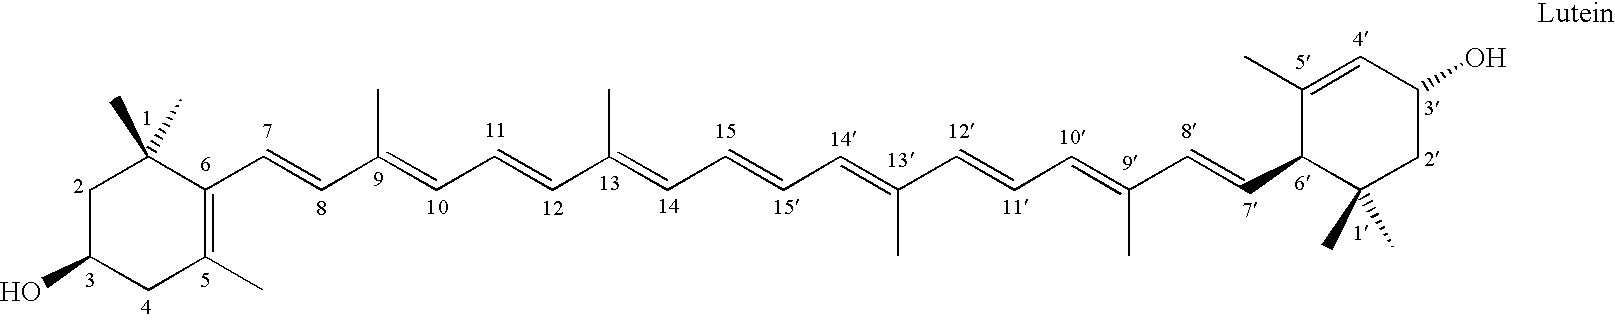 Method for obtaining novel lutein-based formulations